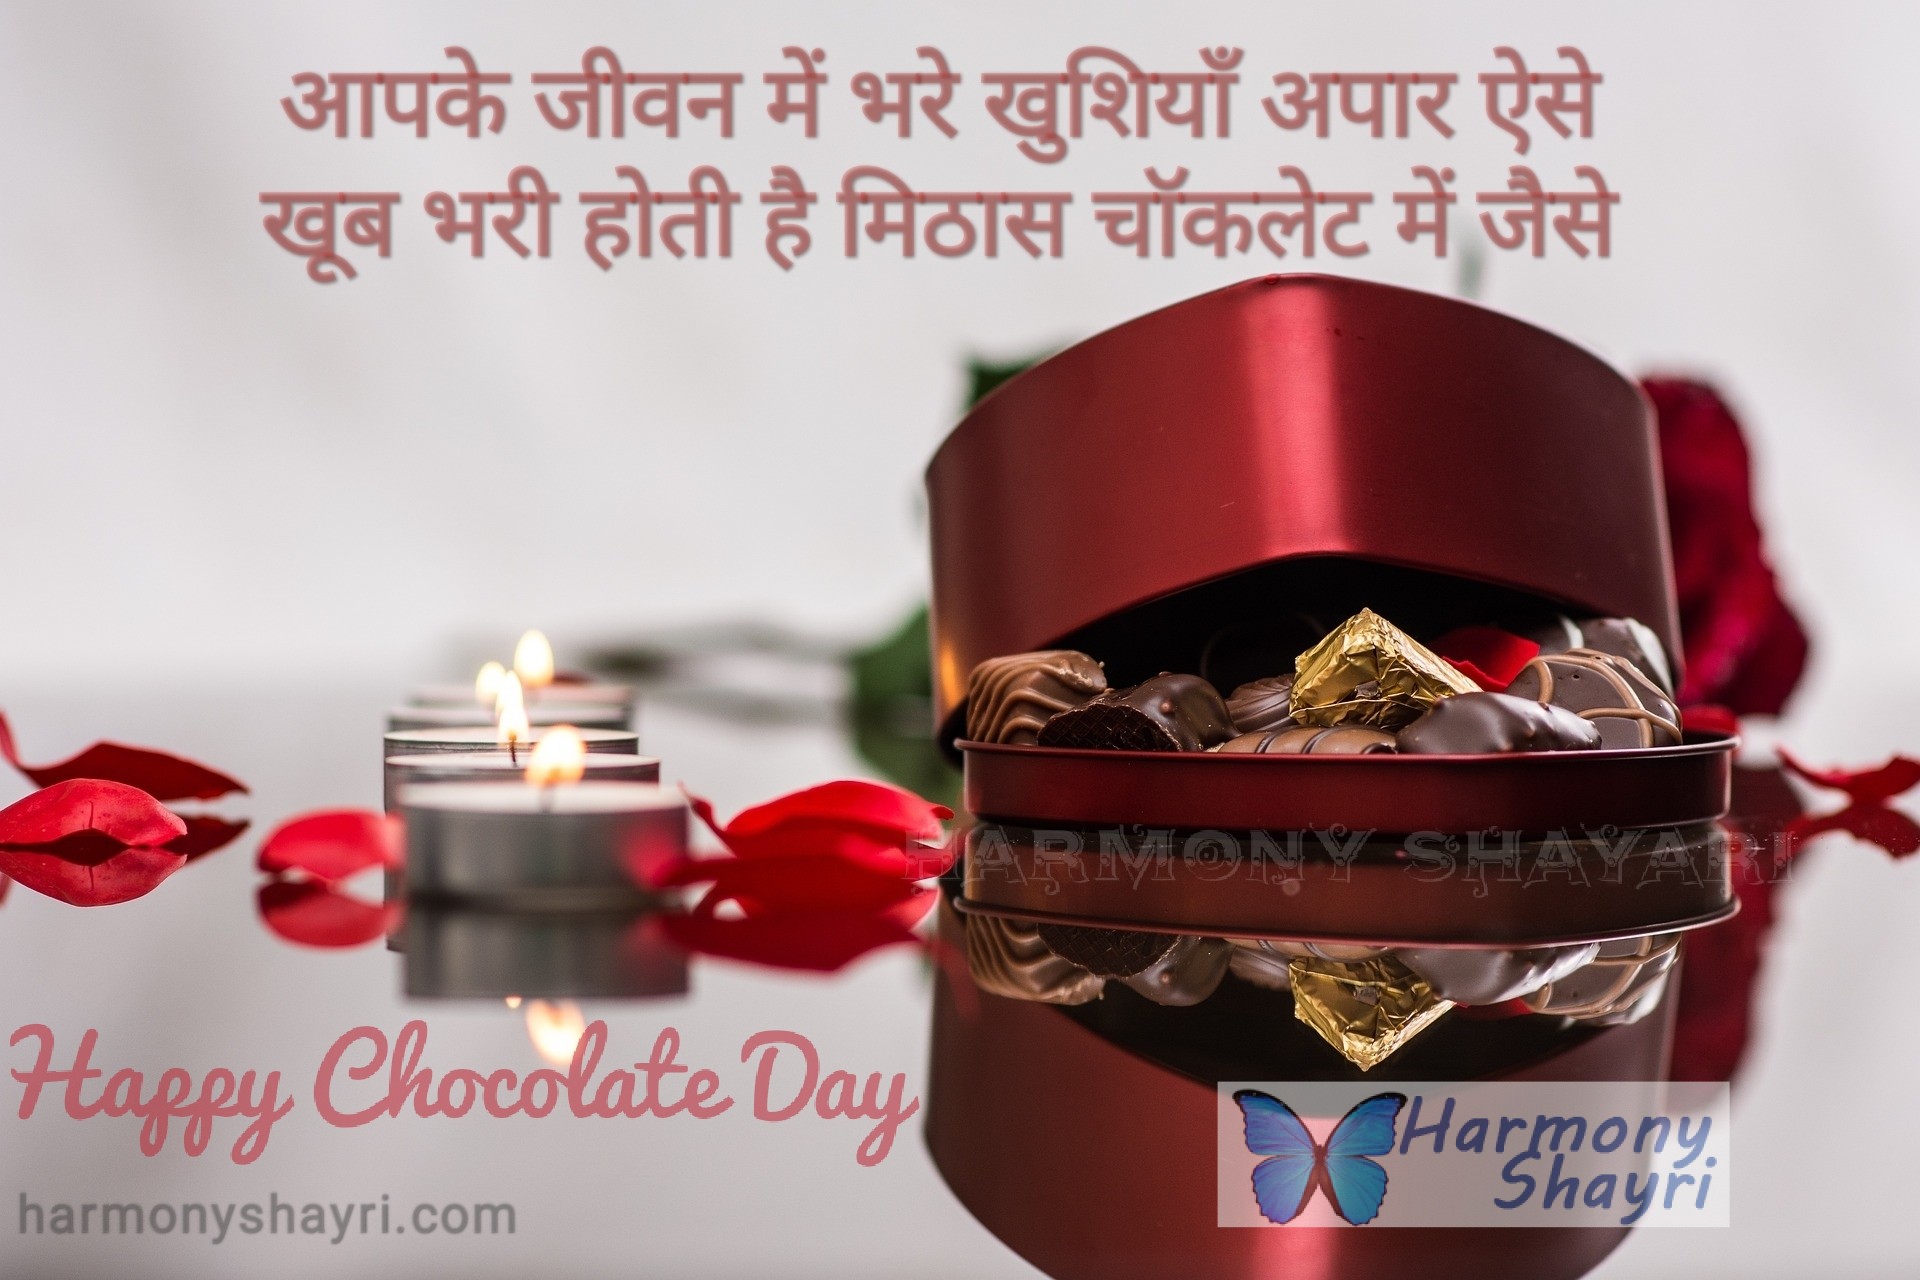 Aapke jeevan mein bhare khushiyan – Happy Chocolate Day